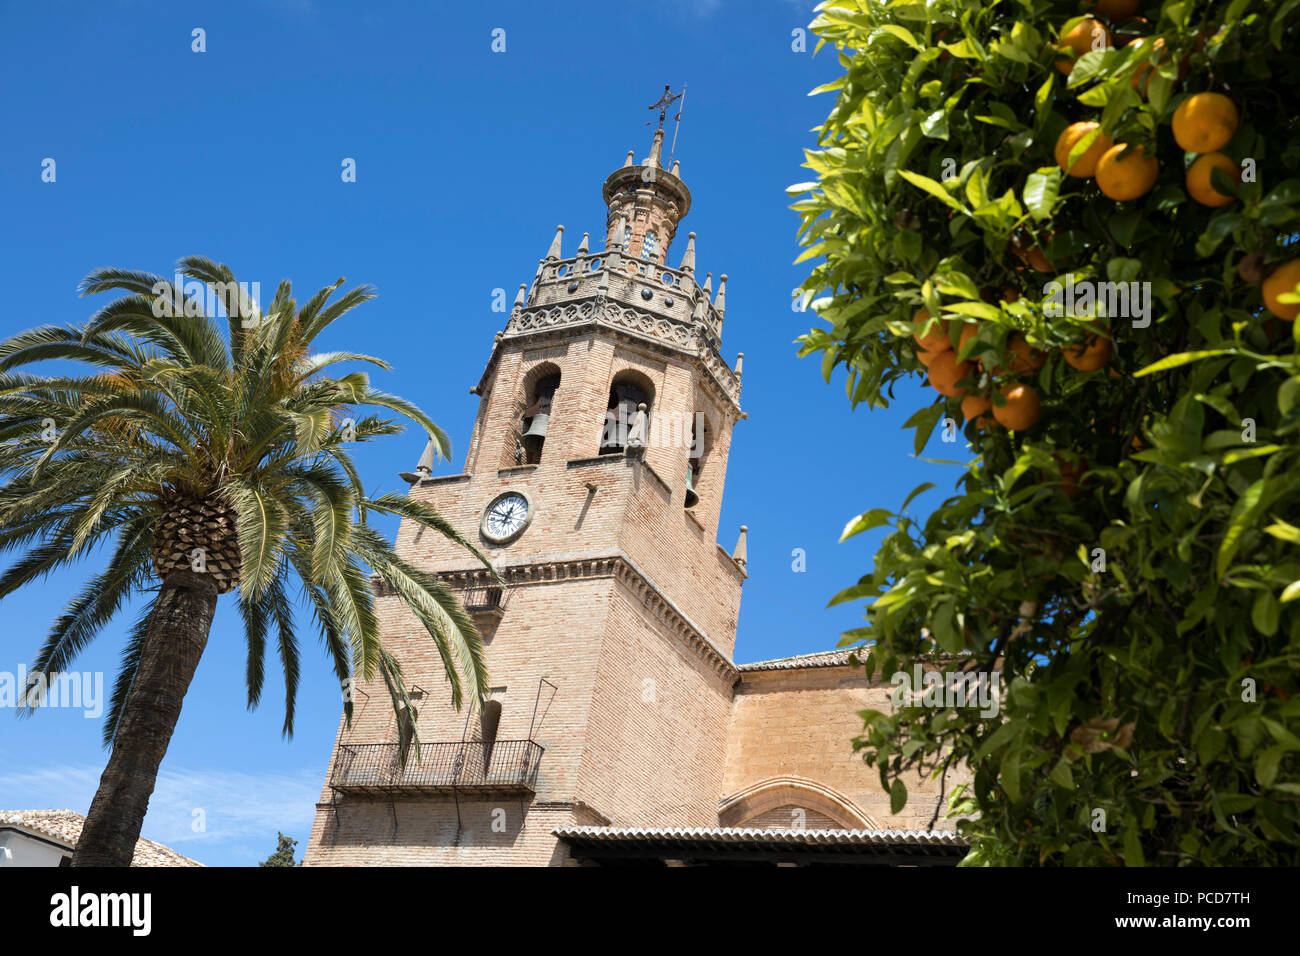 Palm Tree und Turm der Iglesia de Santa Maria la Mayor, Ronda, Andalusien, Spanien, Europa Stockfoto